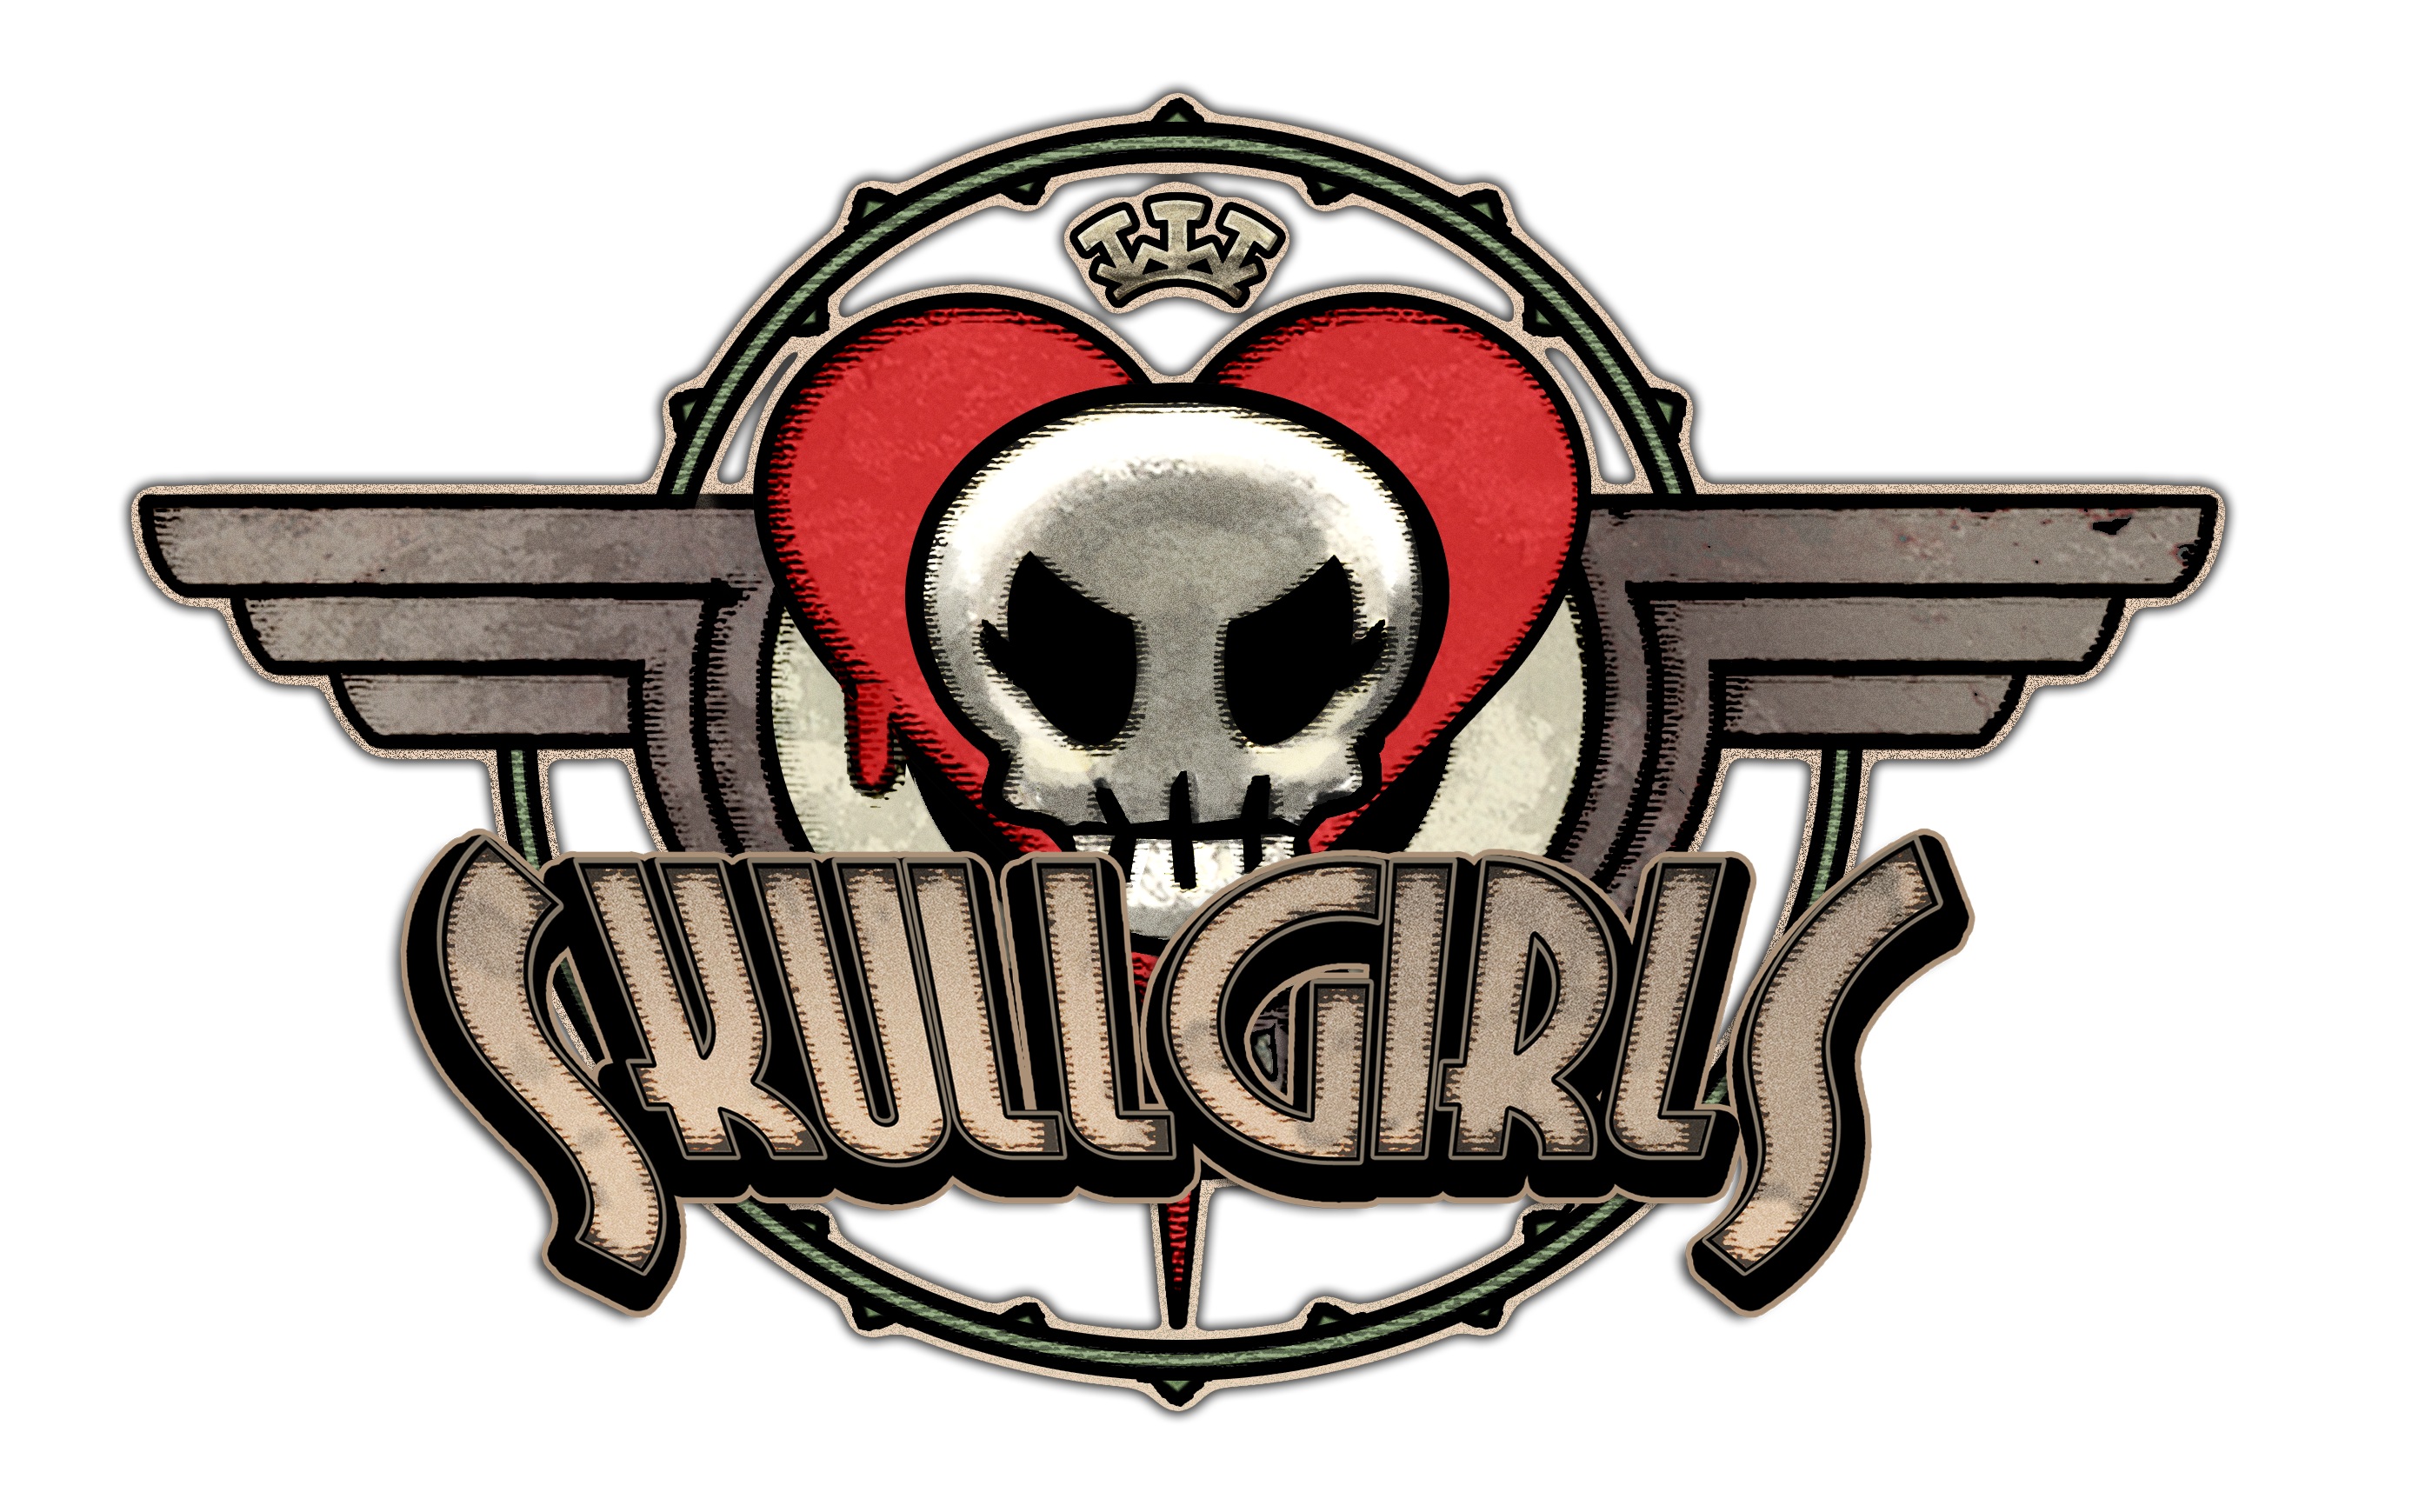 Skullgirls announces new character Parasoul at Evo 2011